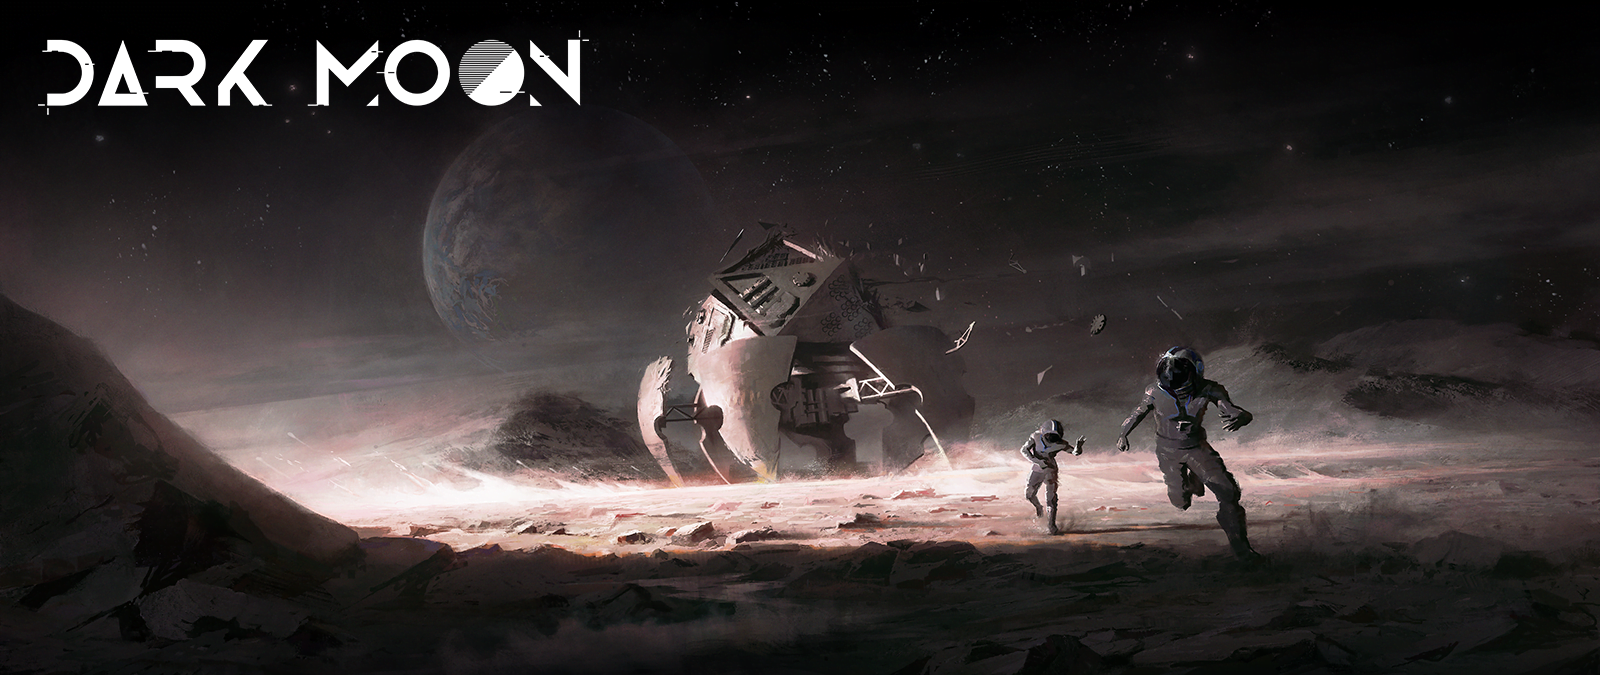 Dark moon lançamento oficialmente anunciado! | dark moon key art with logo | overwatch 2 notícias